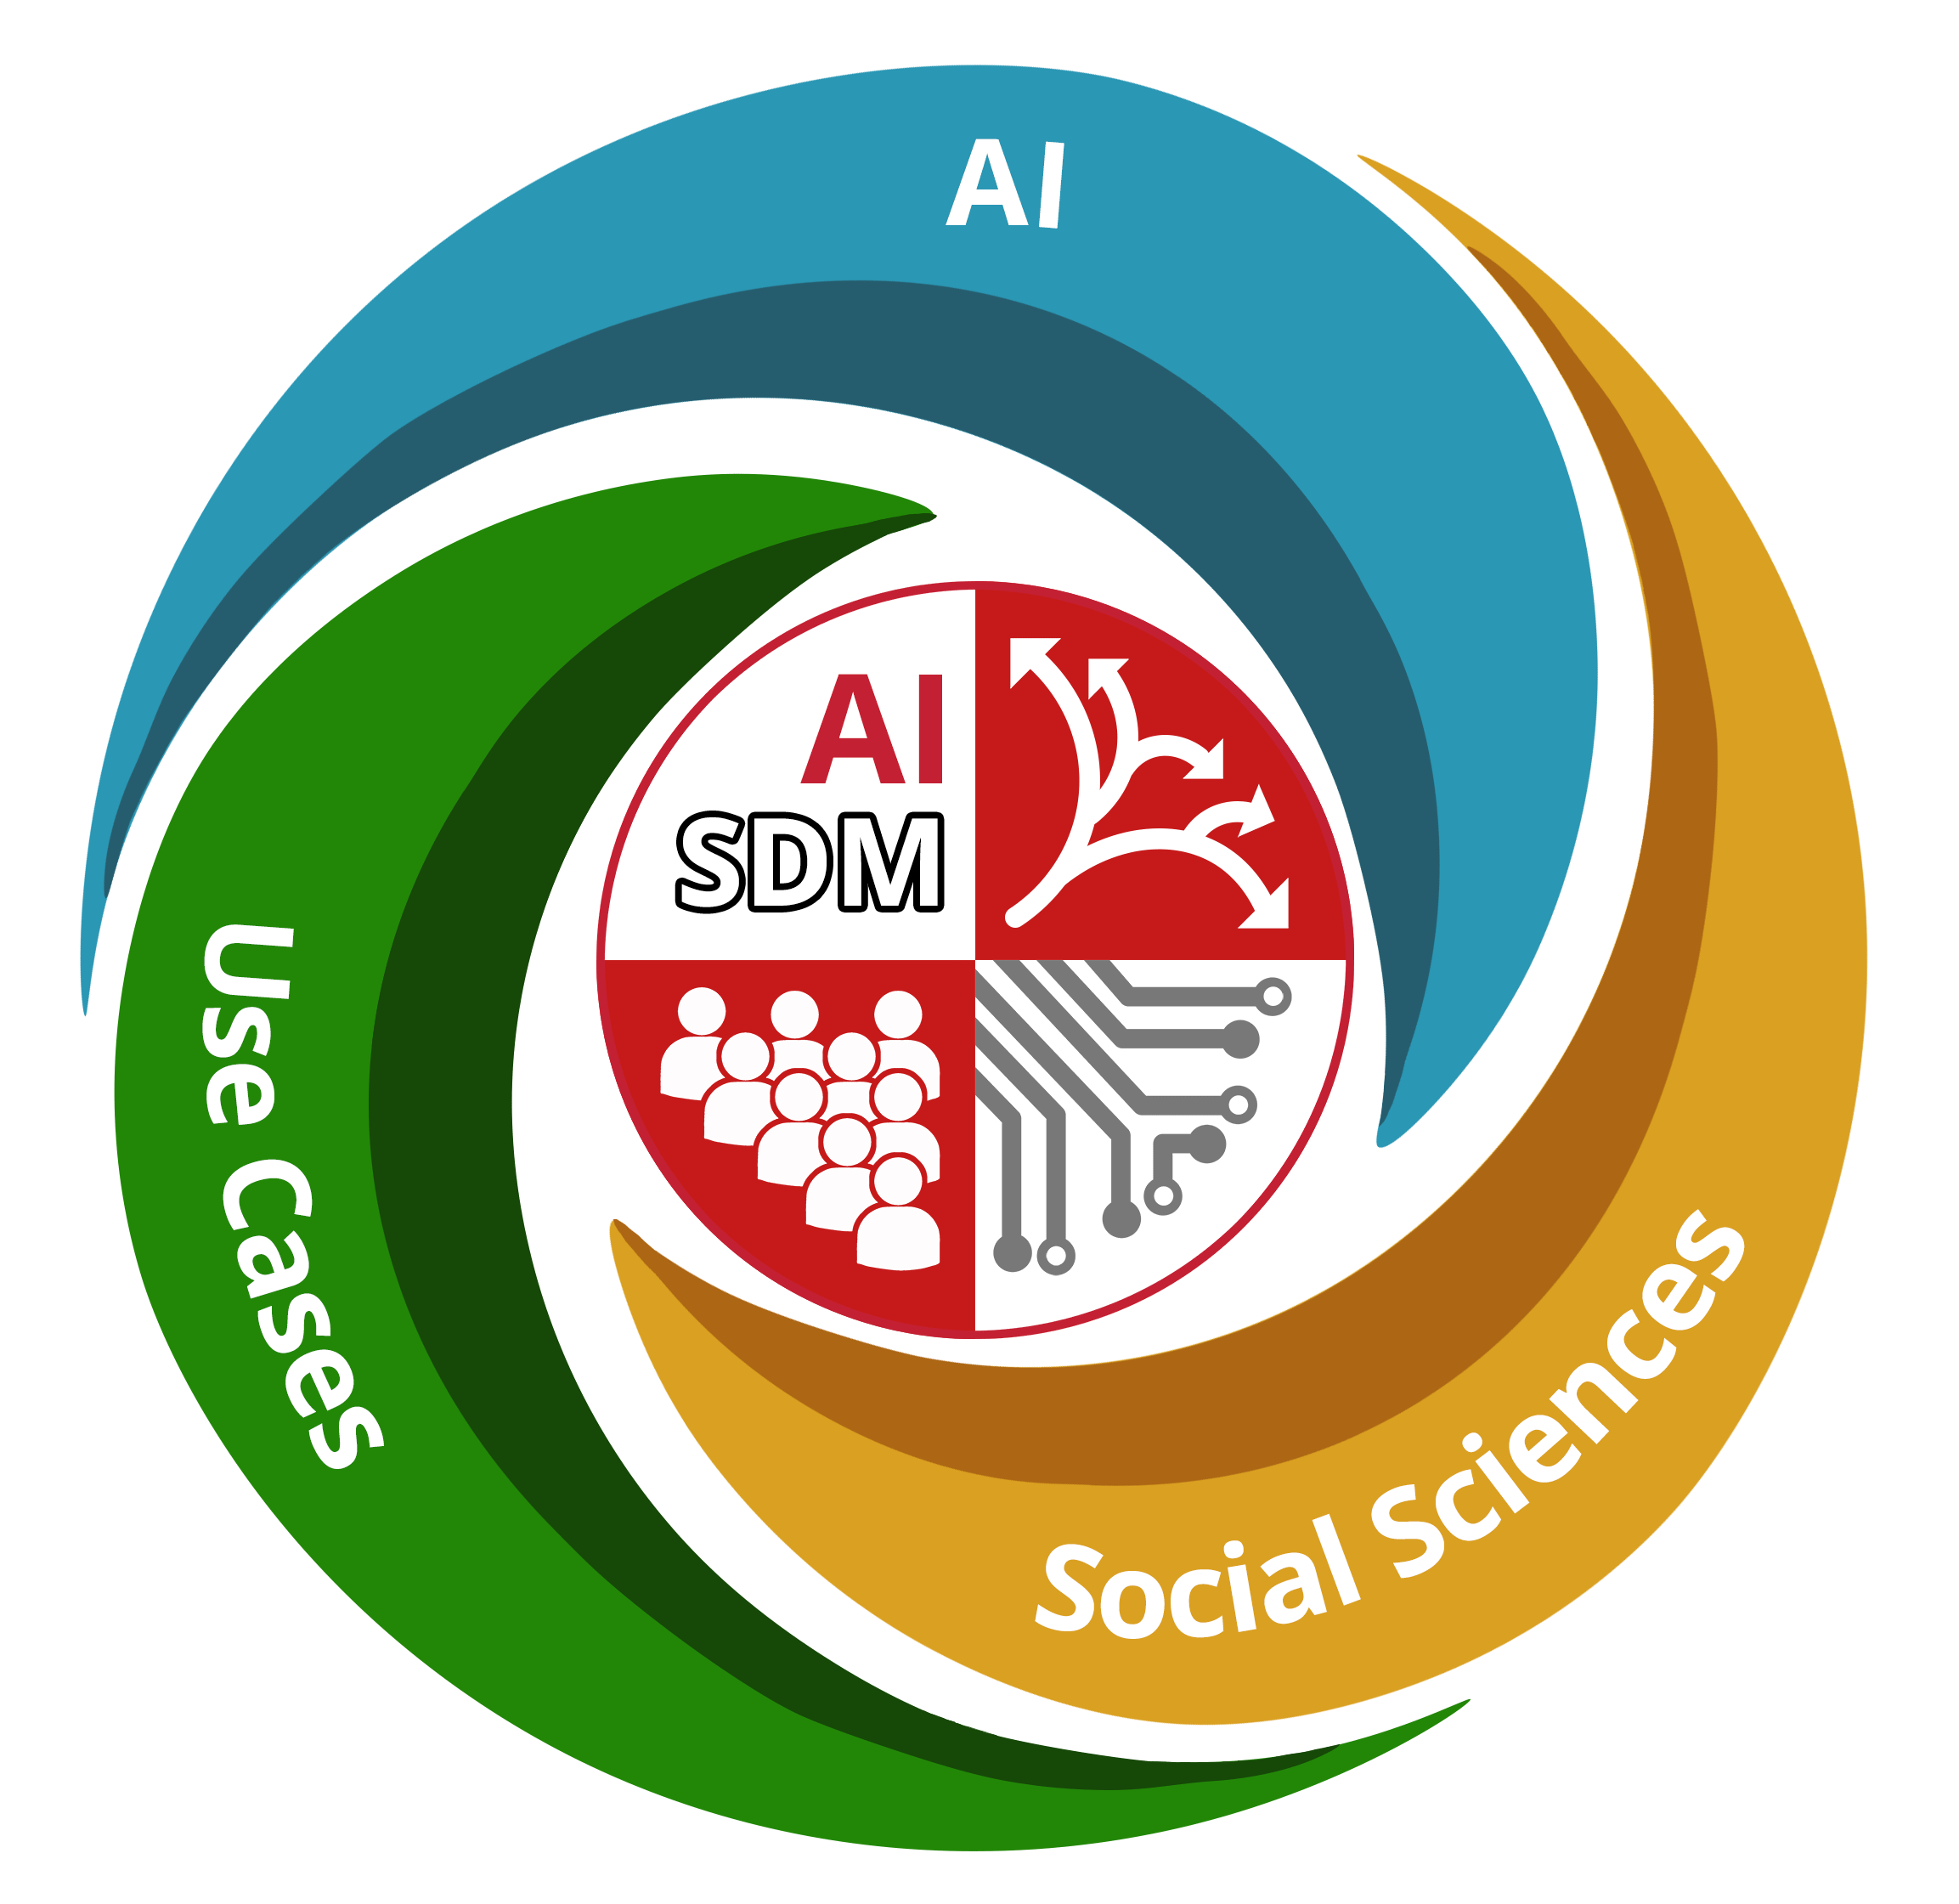 AI-SDM: AI, Social Sciences, Use Cases